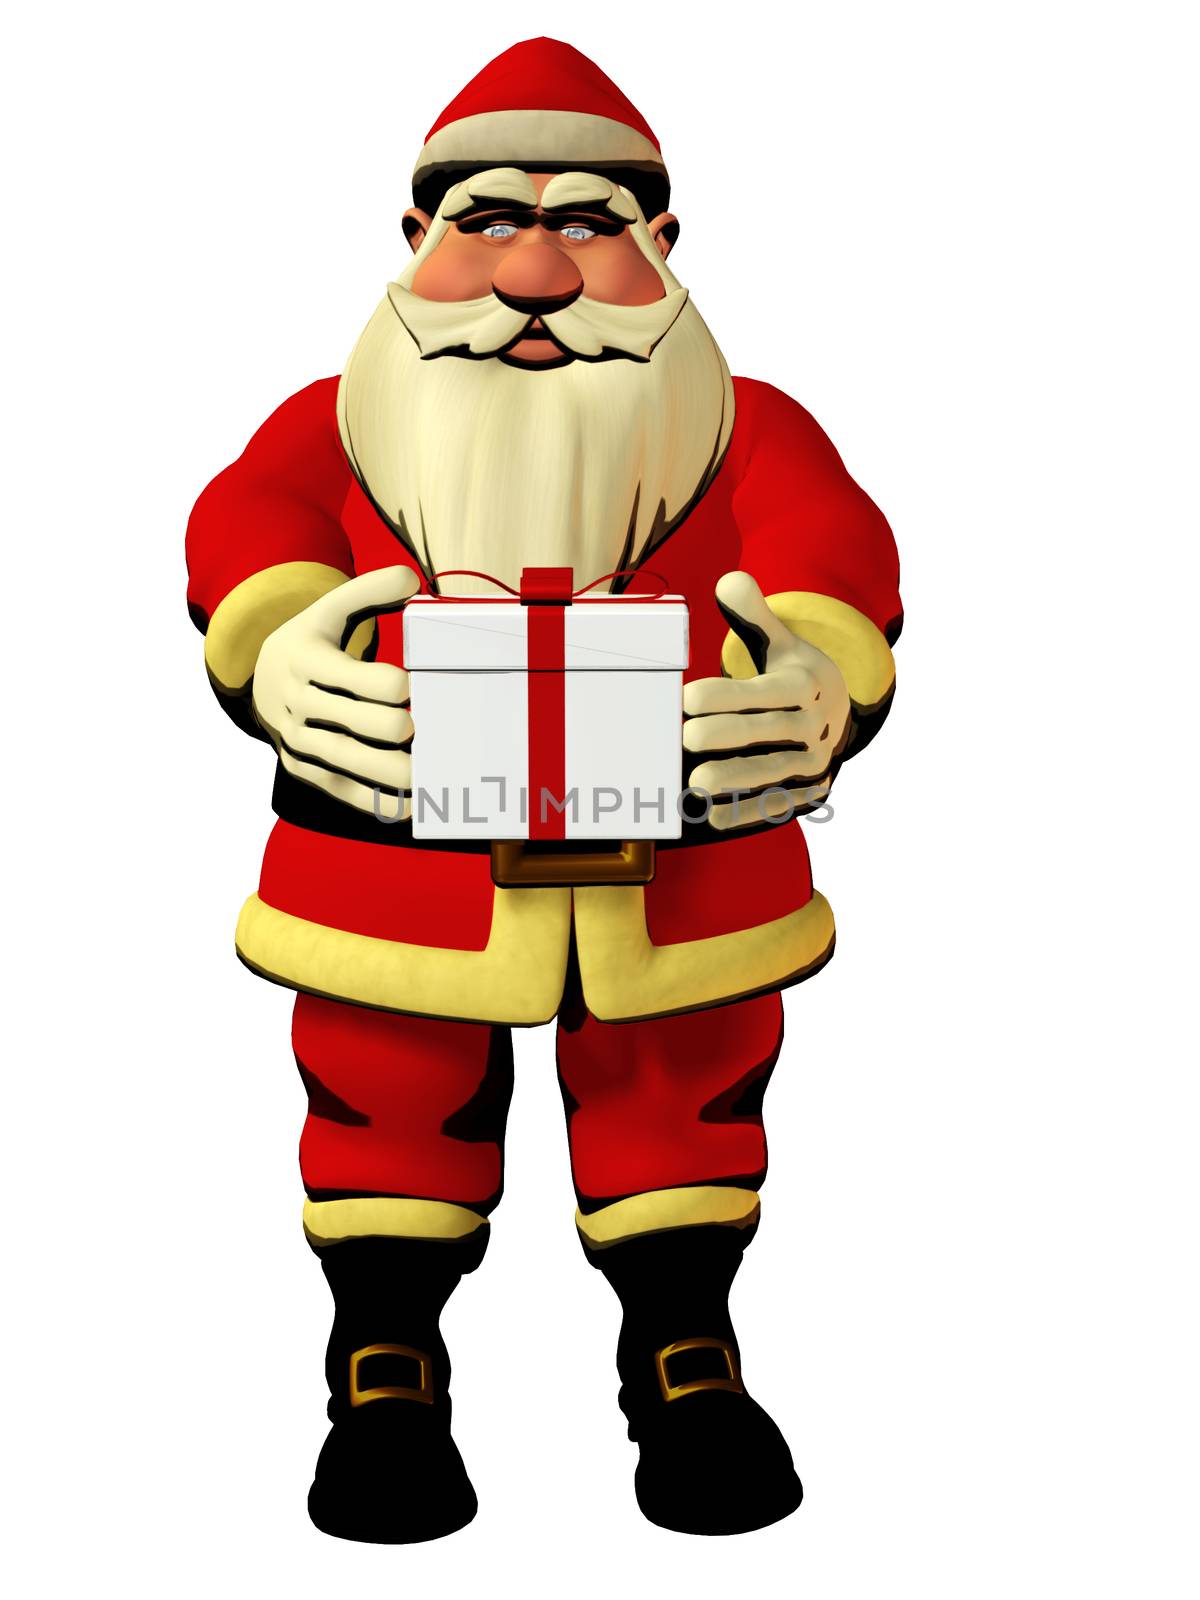 Santa Claus holding gift box 3d illustration by marinini